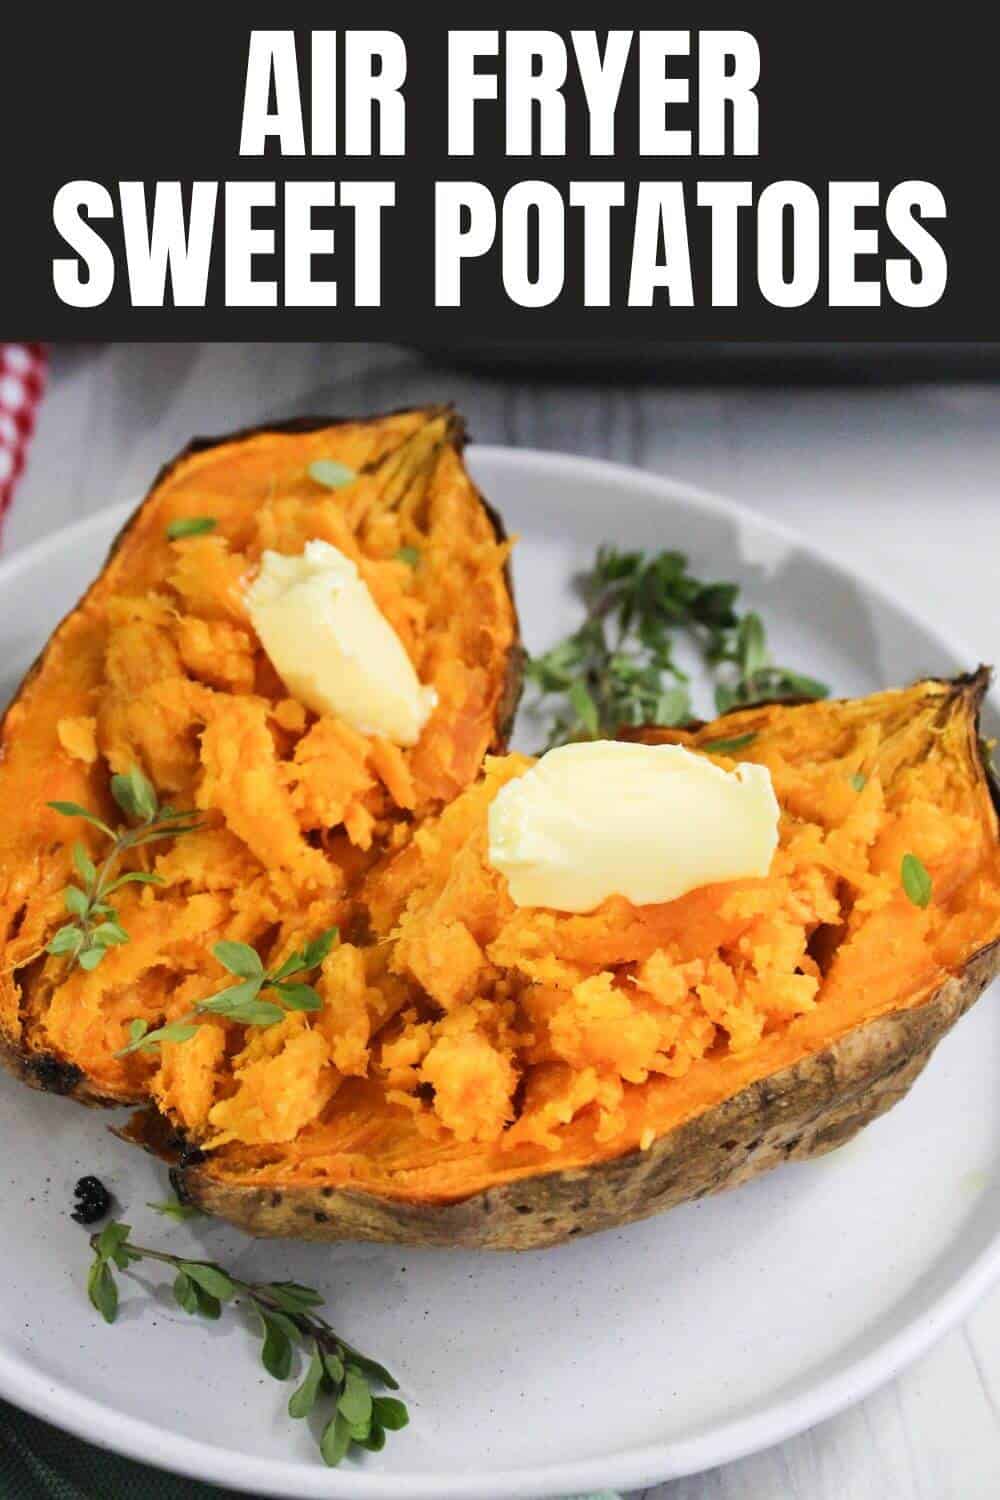 Air fryer sweet potatoes on a plate.